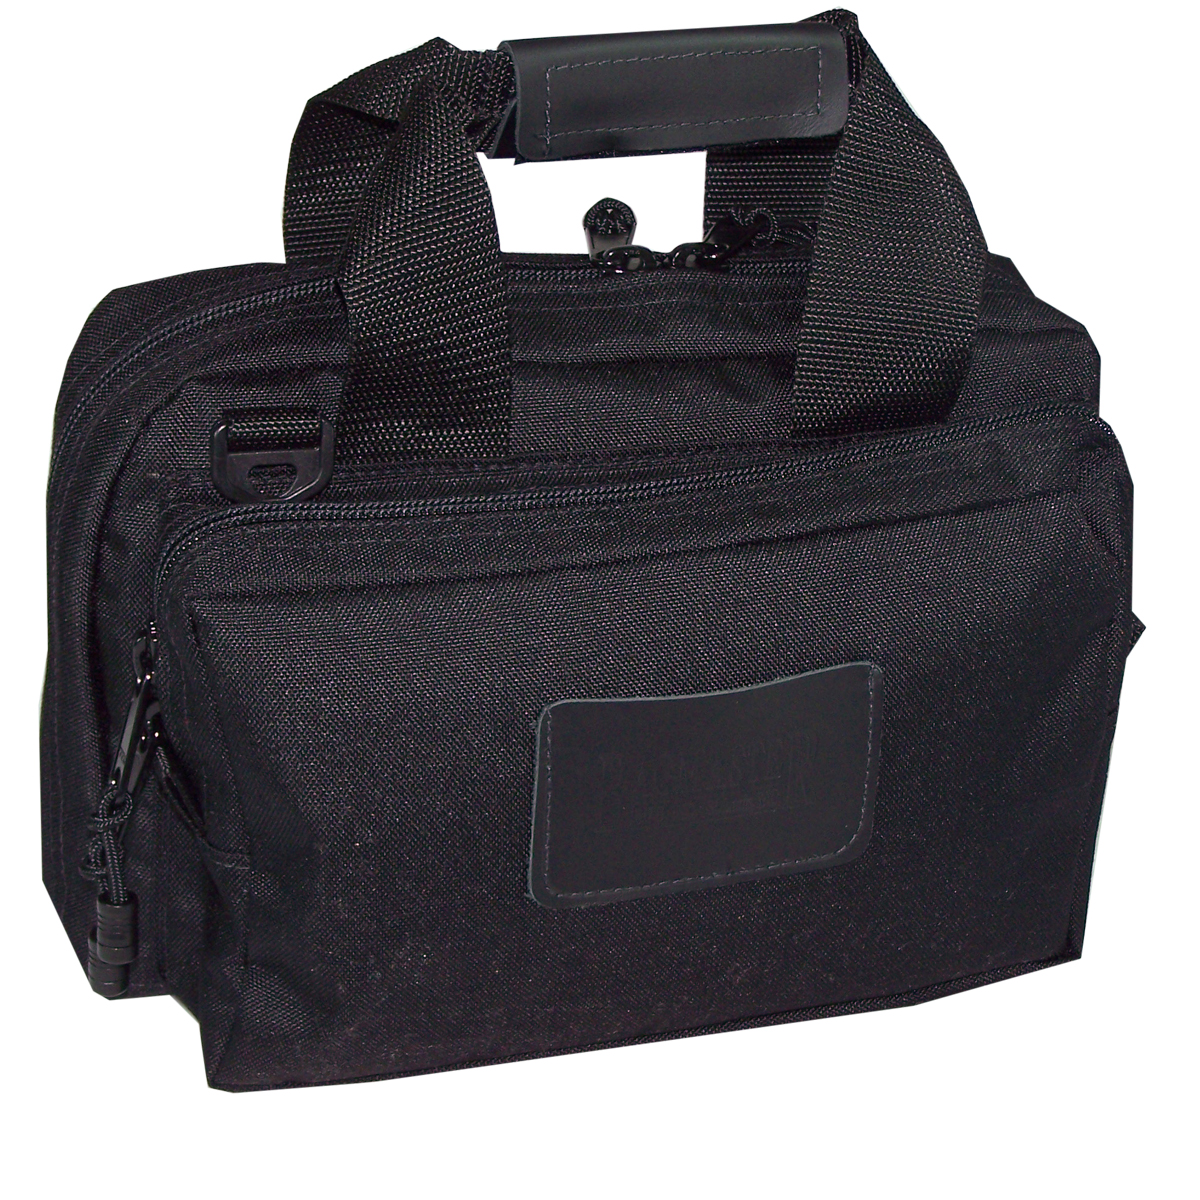 WiskurTactical.com Mini Range Bag Deluxe - Black - Bagmaster Made in USA